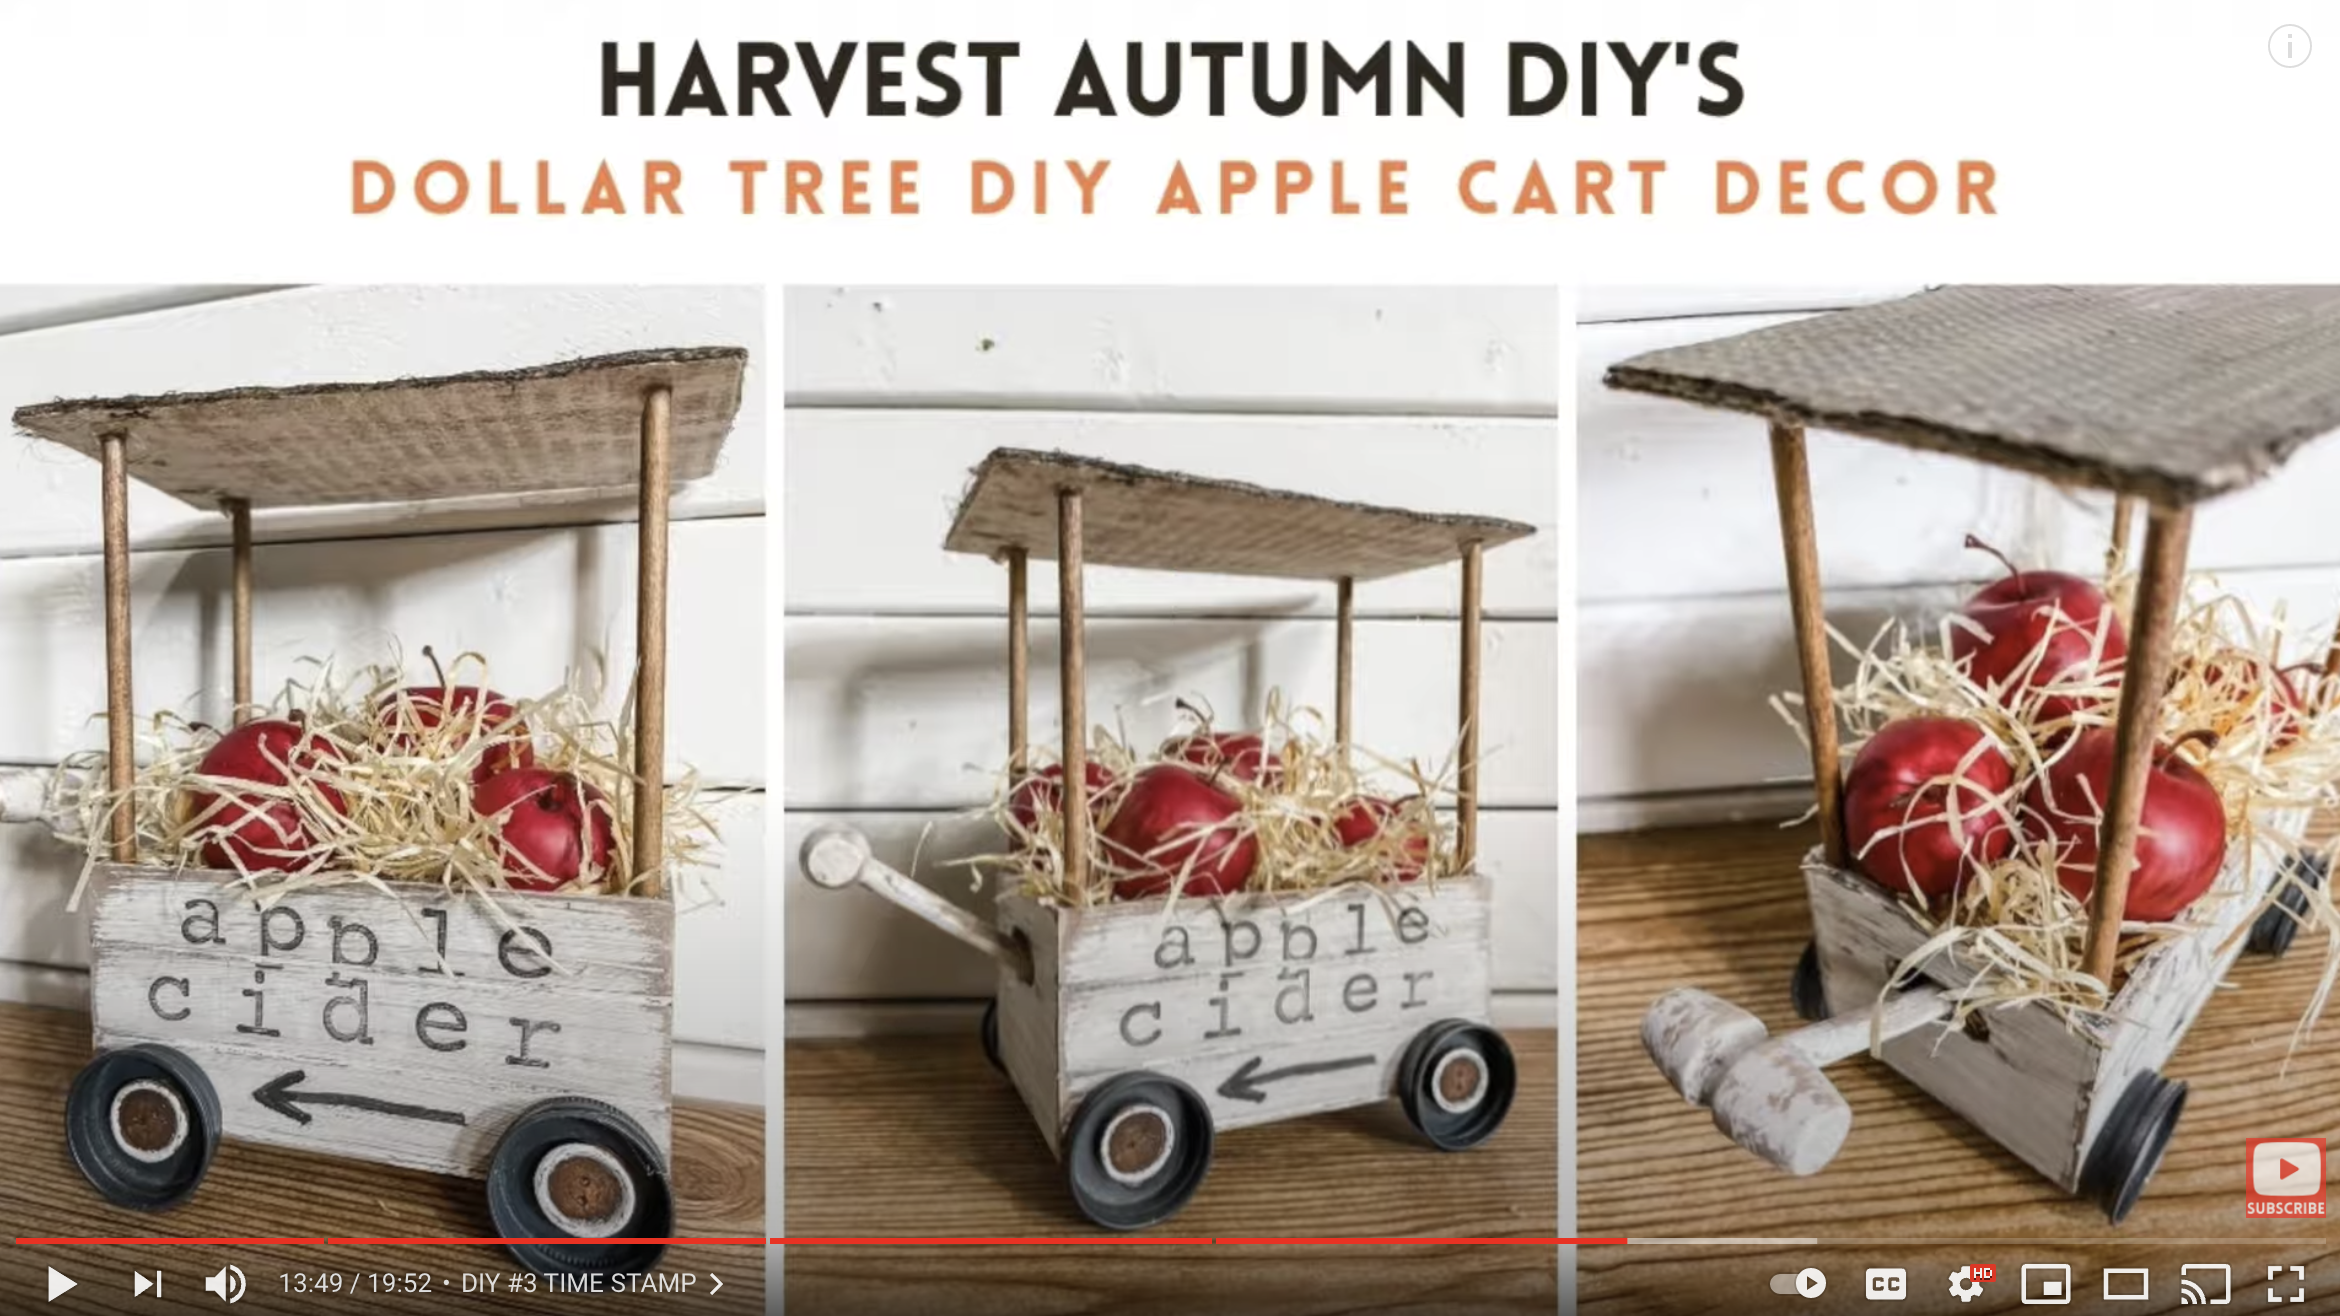 DIY Decorative Apple Cider Cart